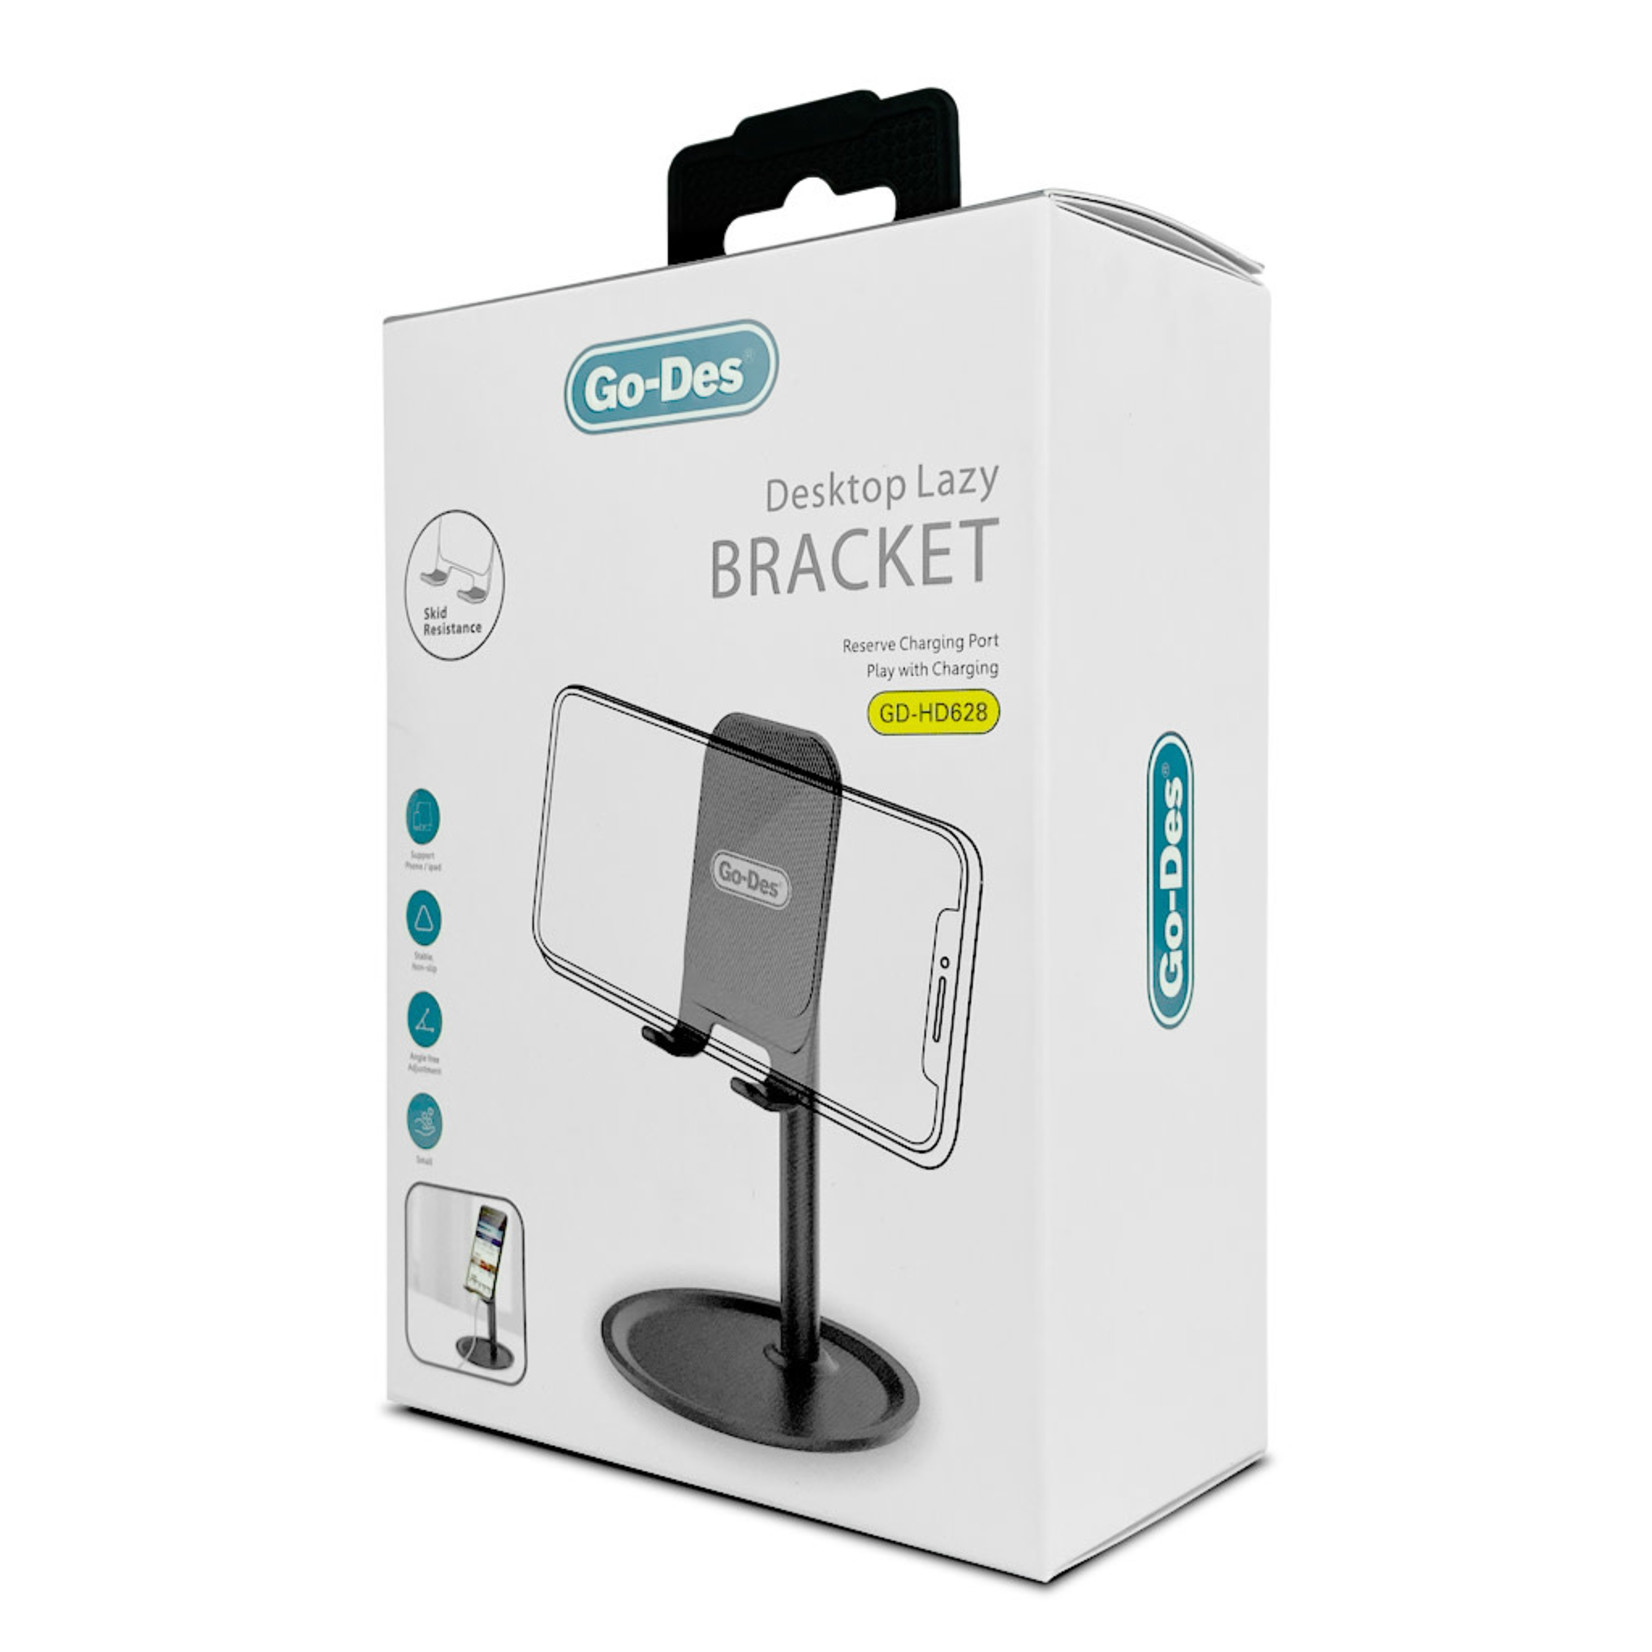 Go-Des Desktop Lazy Bracket Phone Stand / Mount (HD628)